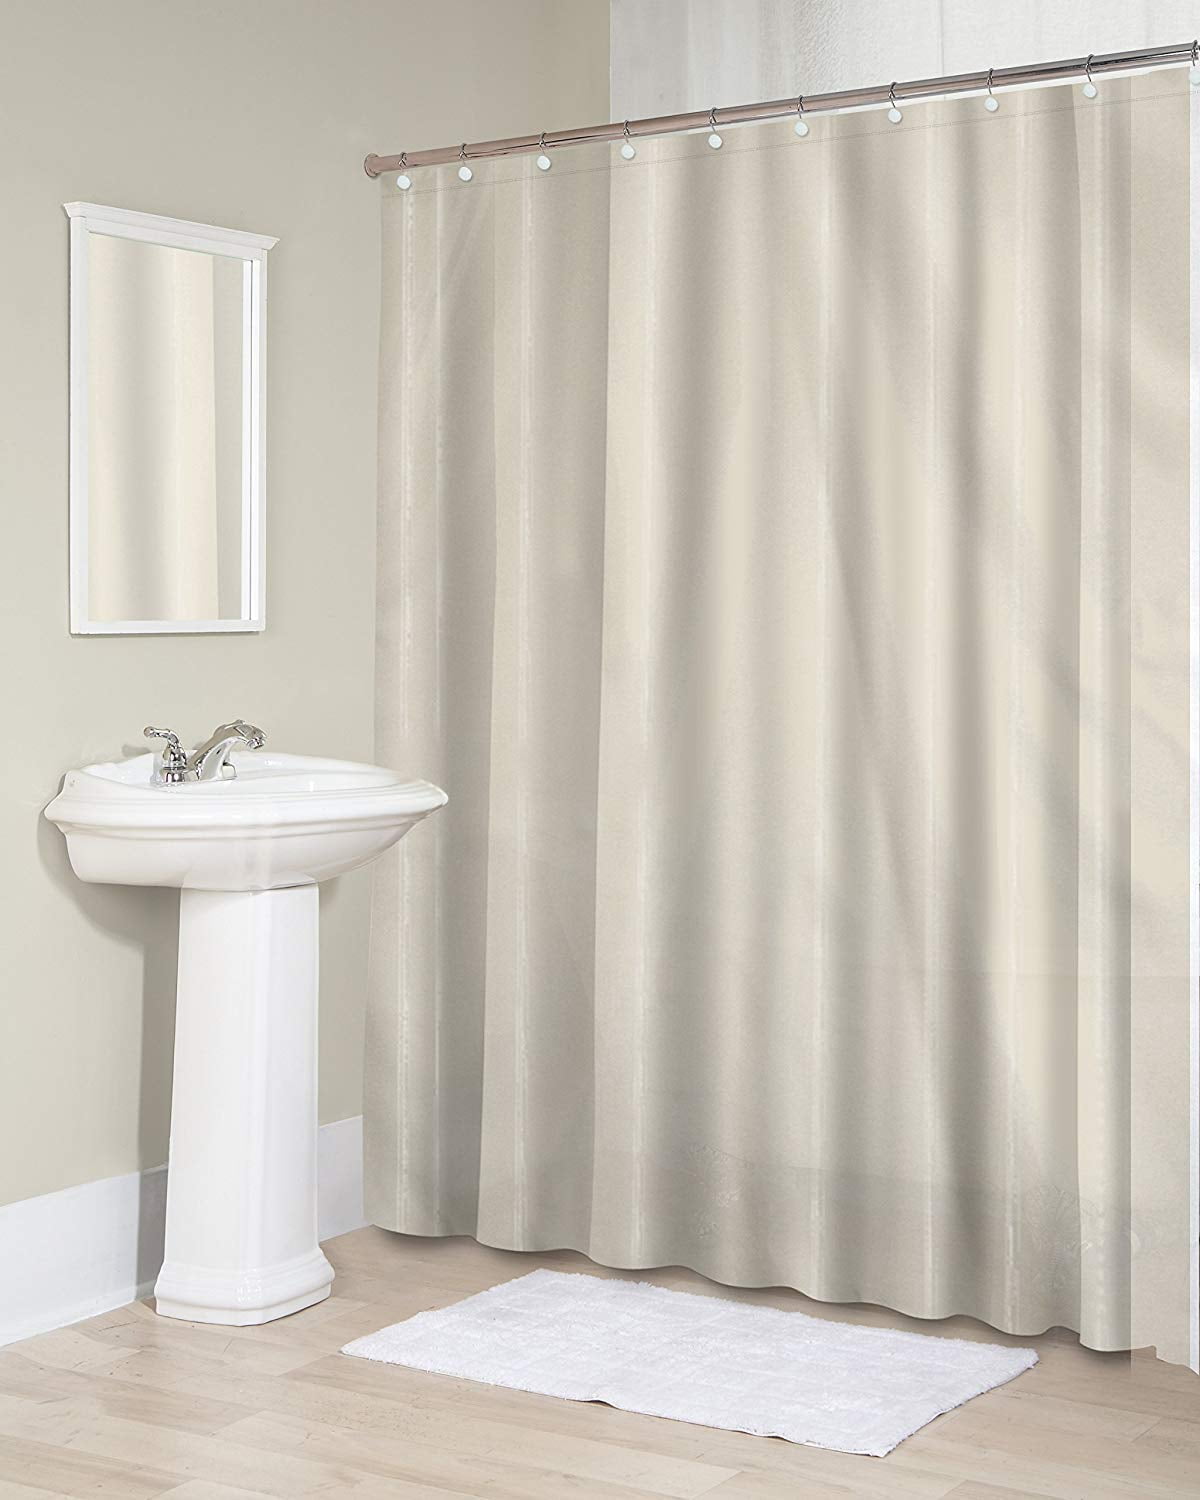 Polyester Black Bear Waterproof Bathroom Fabric Shower Curtain With 12 Hook 